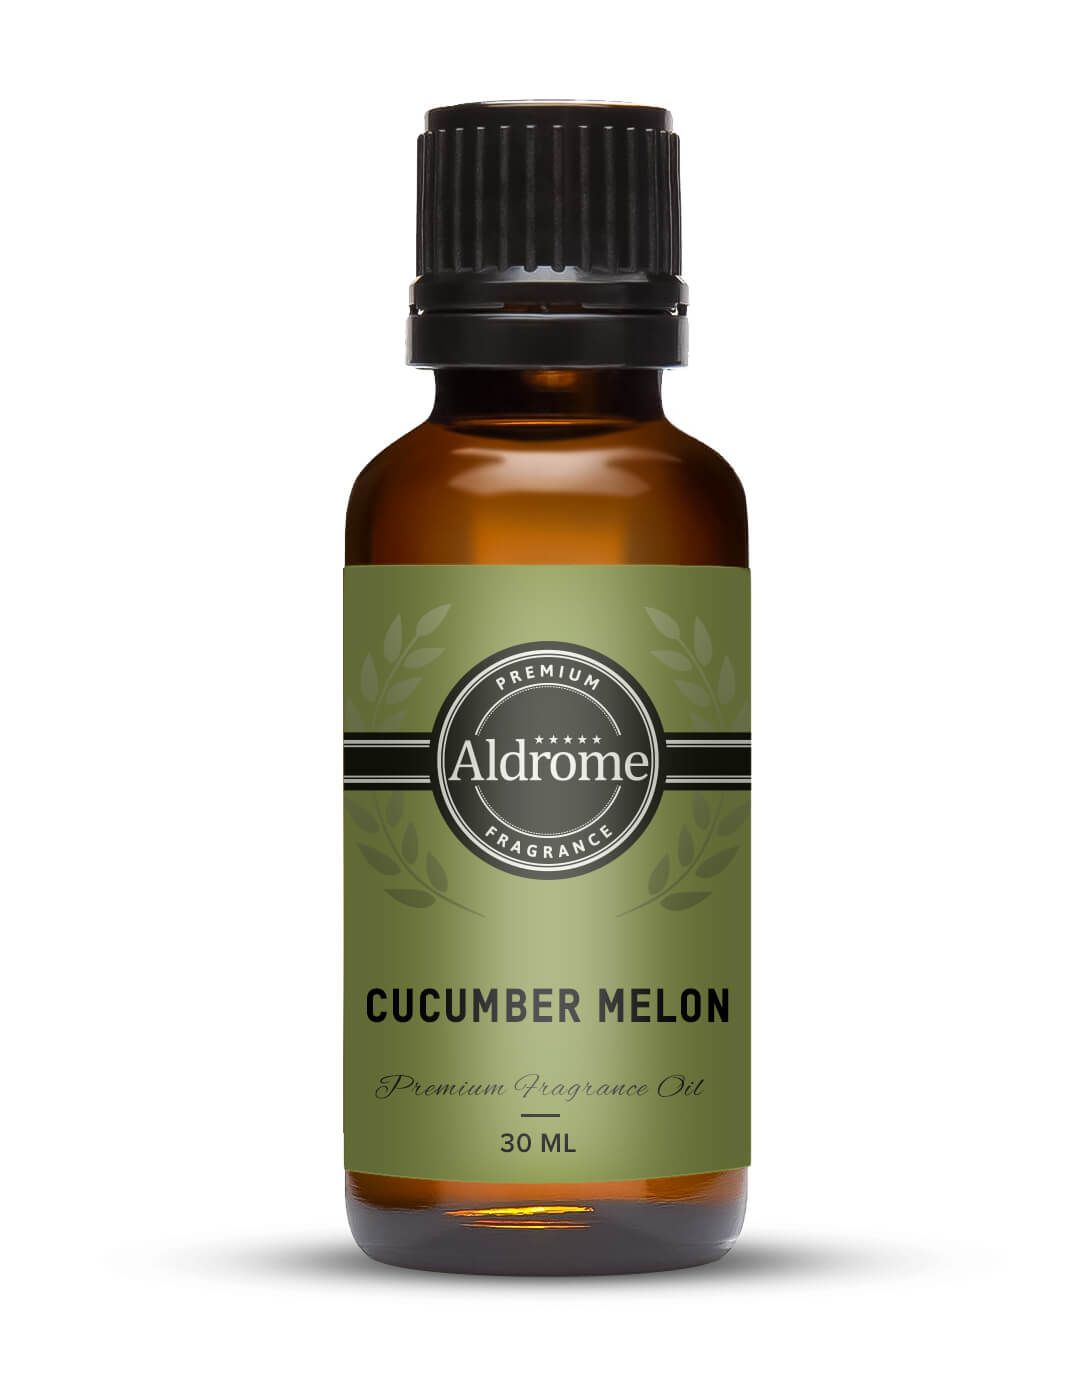 Cucumber Melon Fragrance Oil - 30ml | Buy Cucumber Melon Fragrance Oil